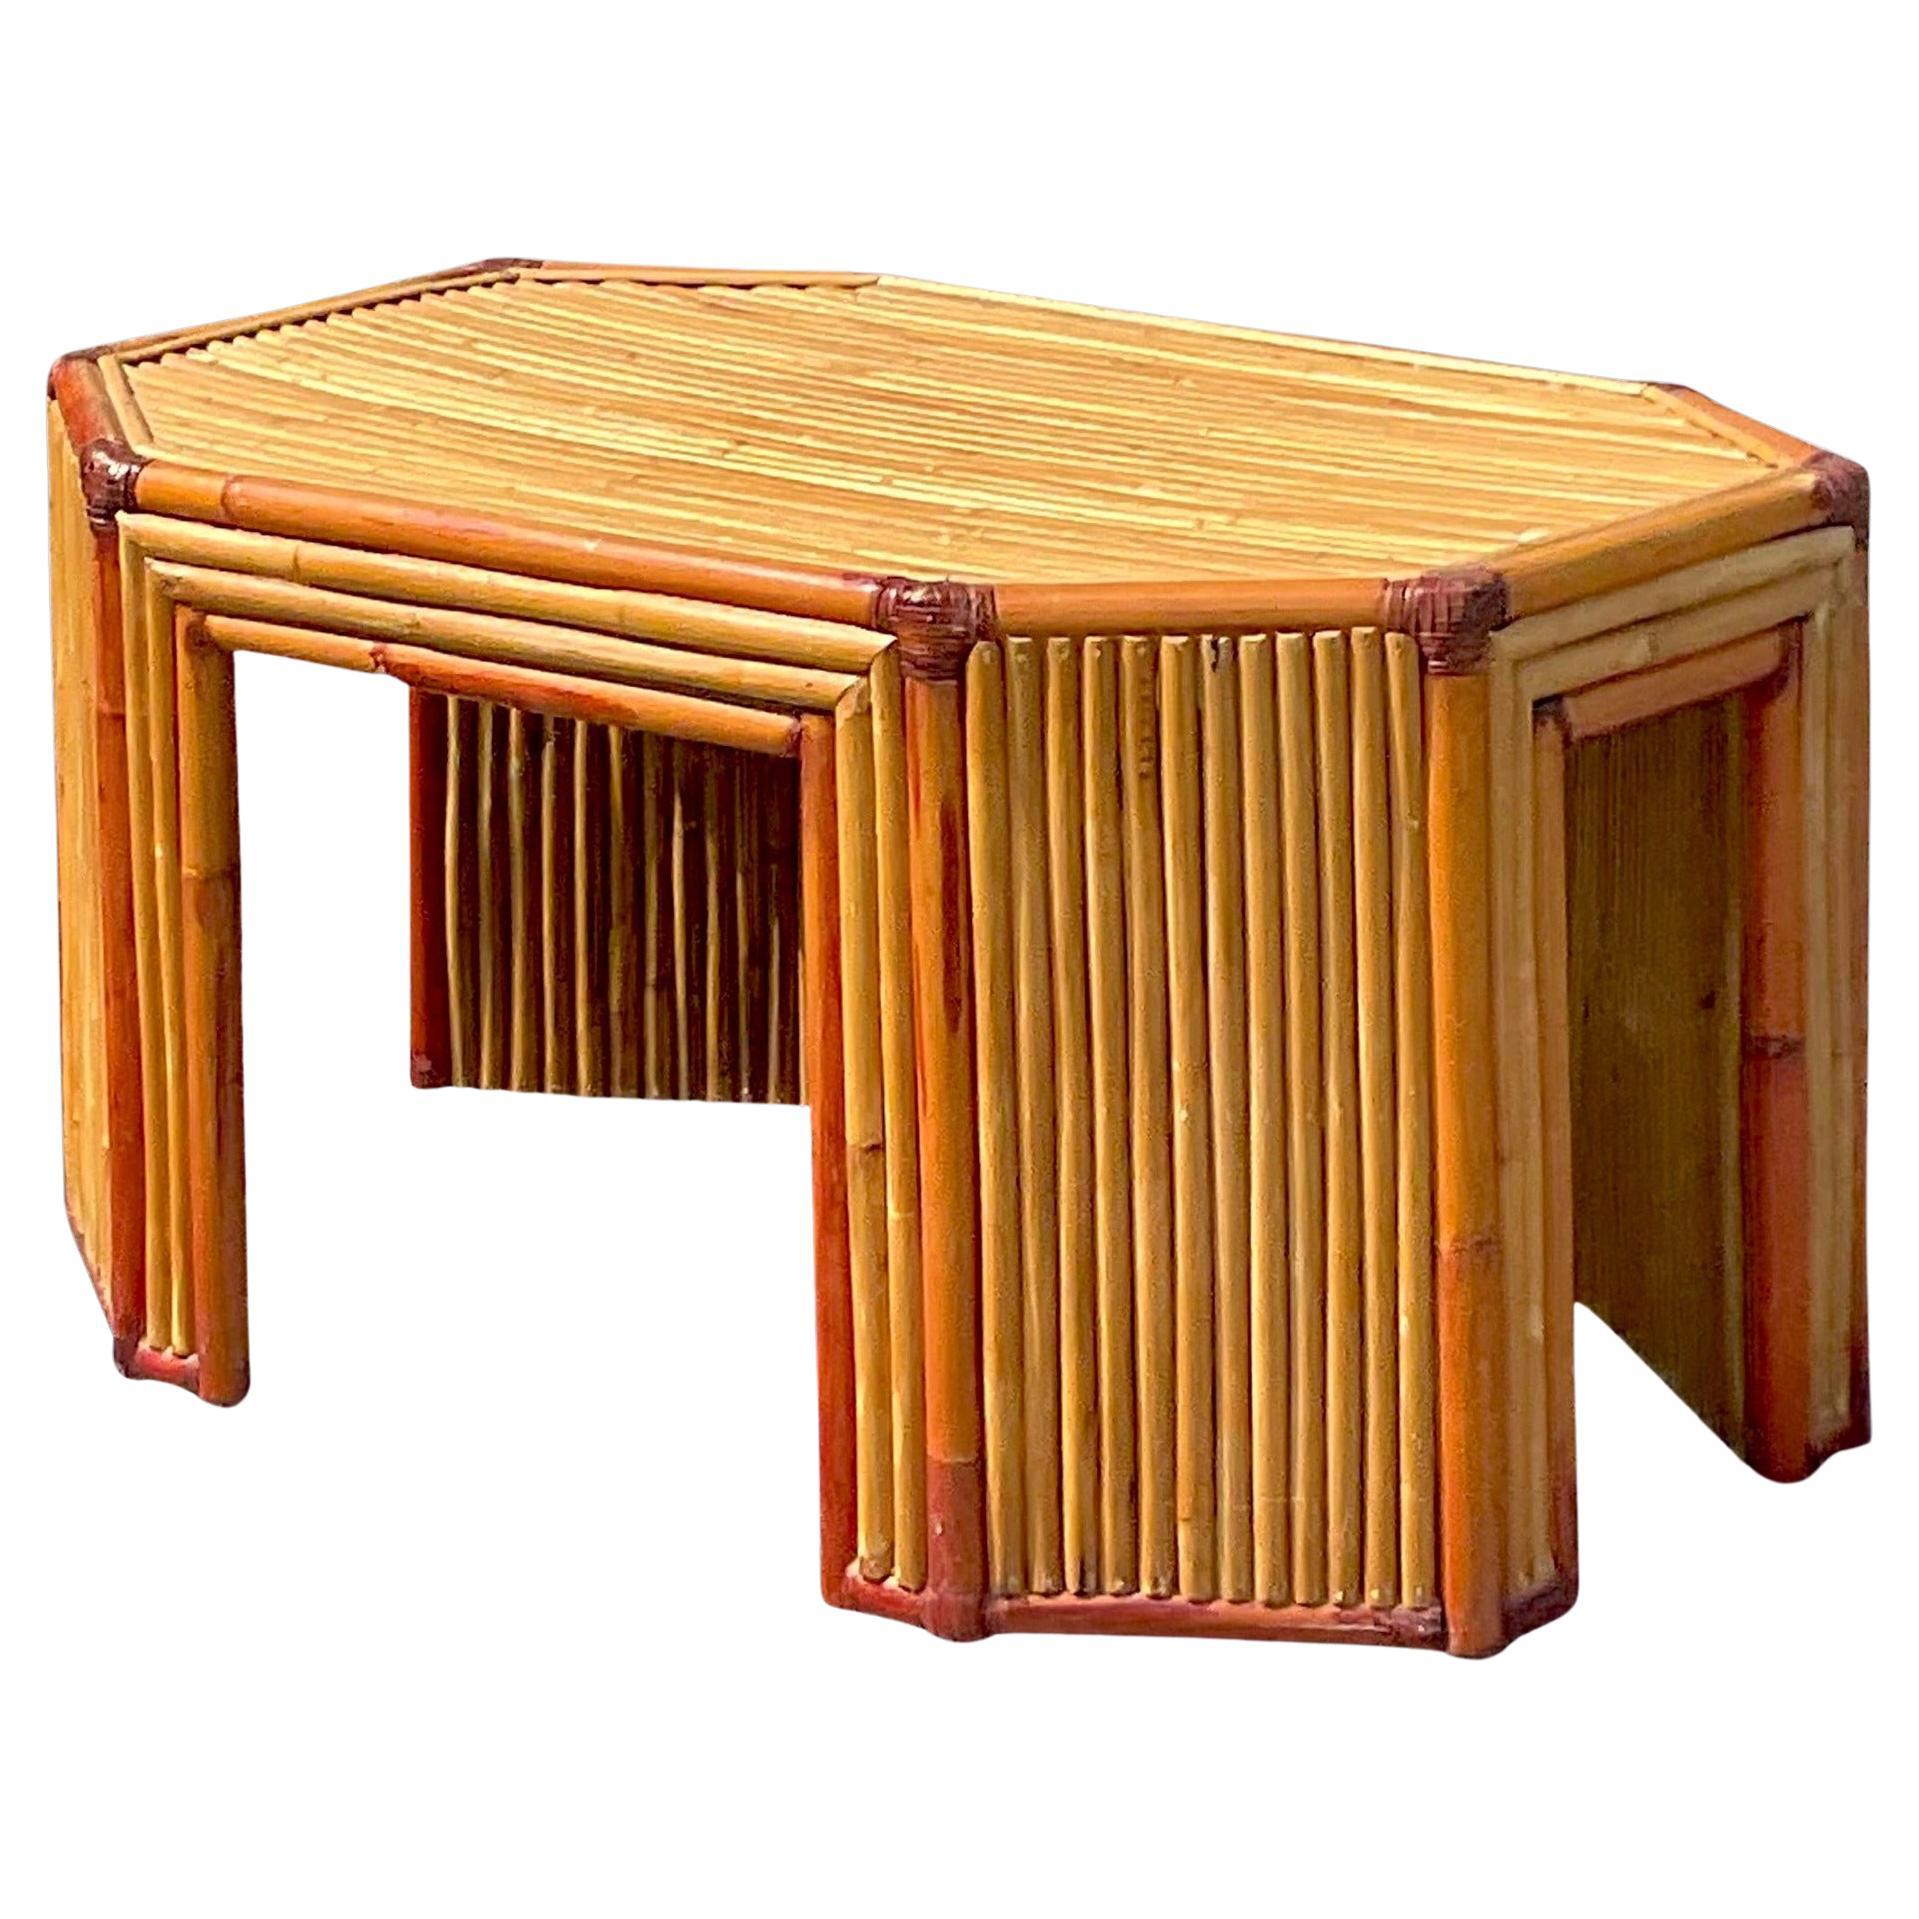 Table basse en rotin octogonale de style côtier de la fin du 20e siècle en vente